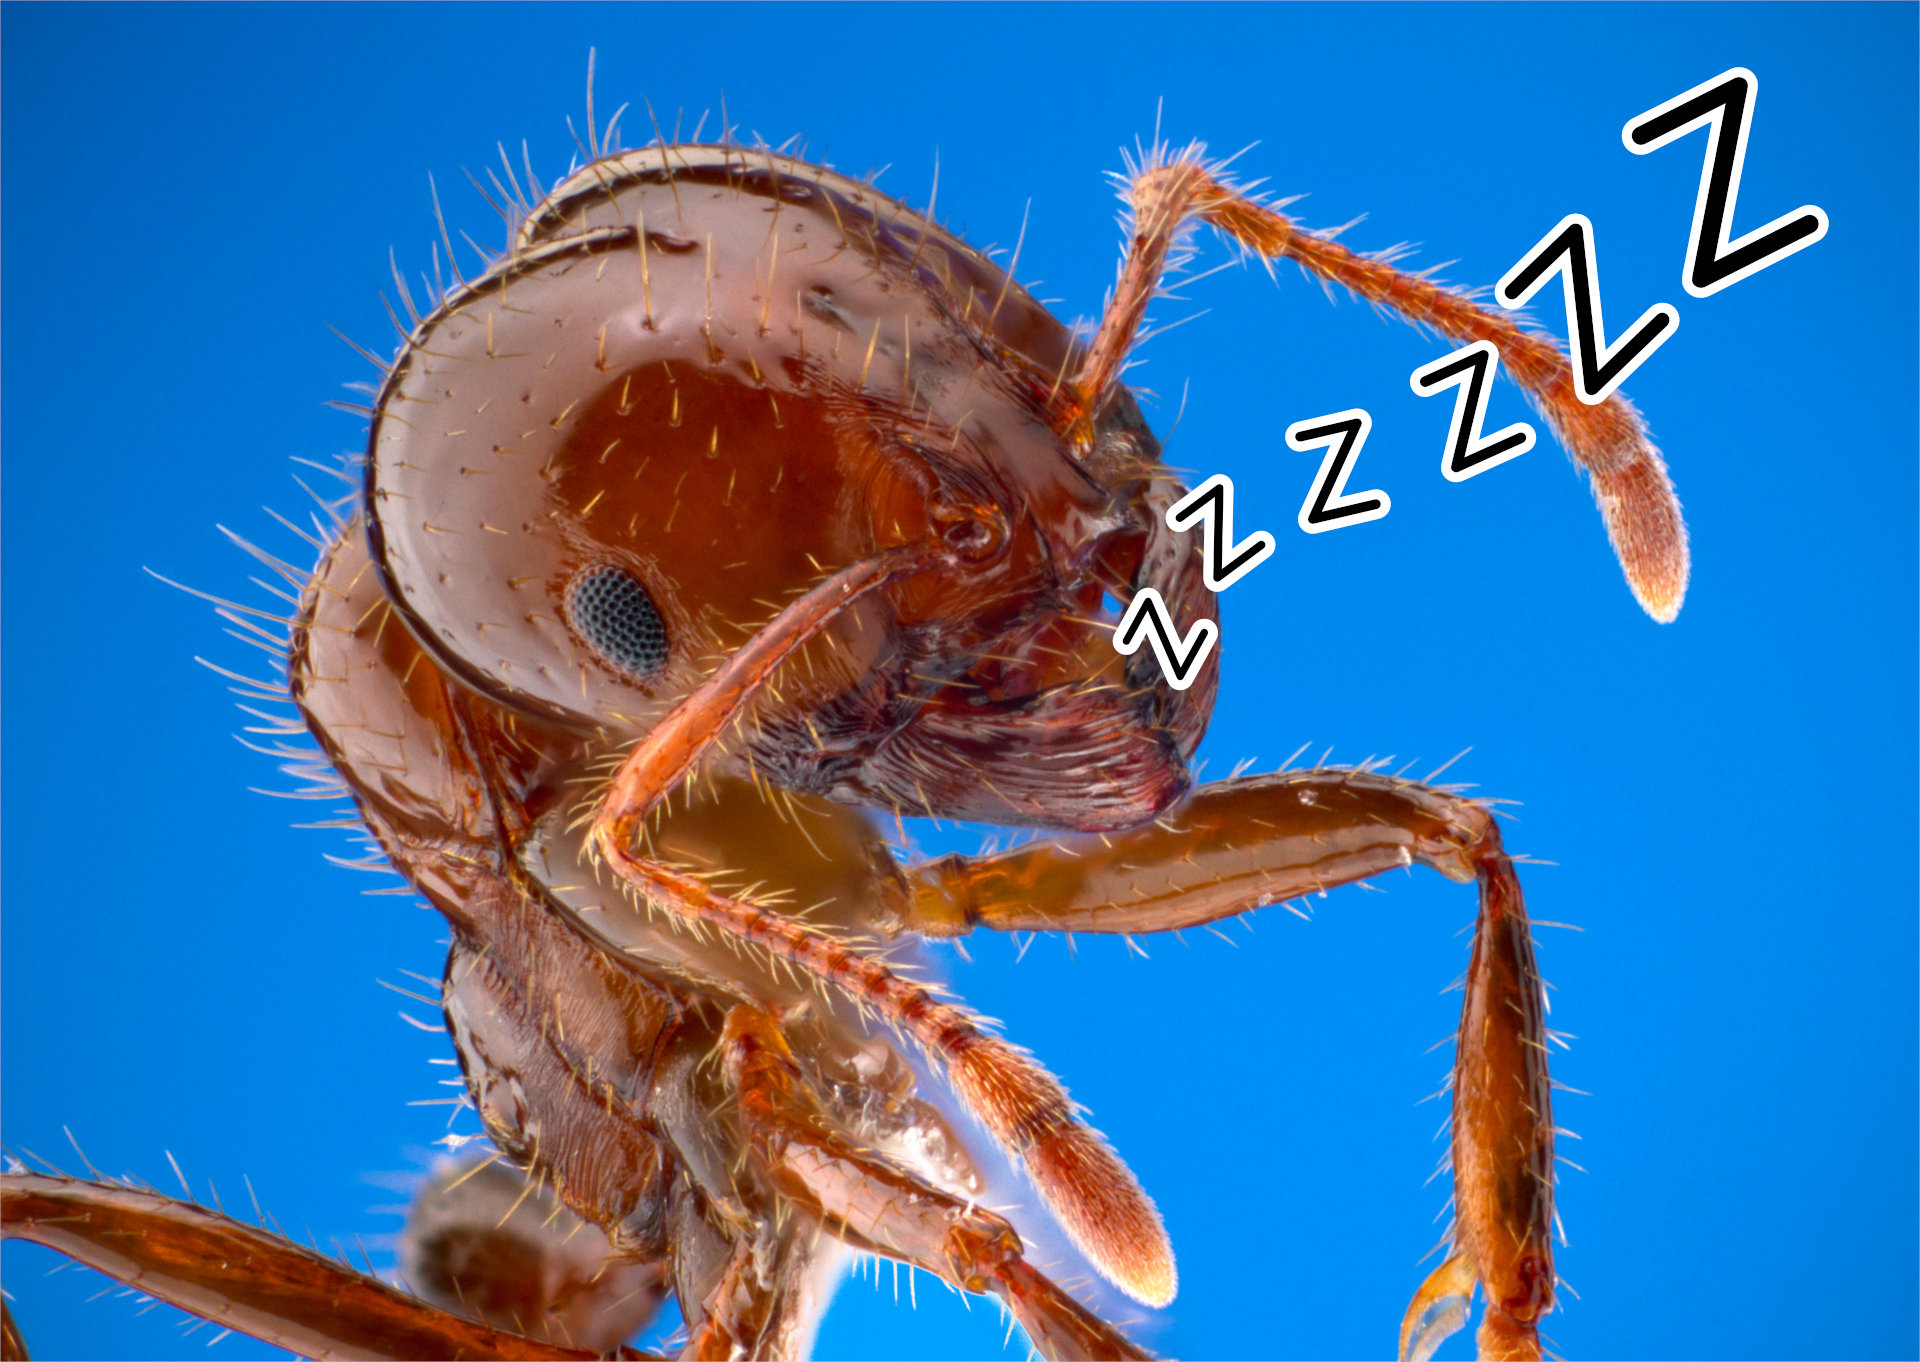 When do ants sleep?